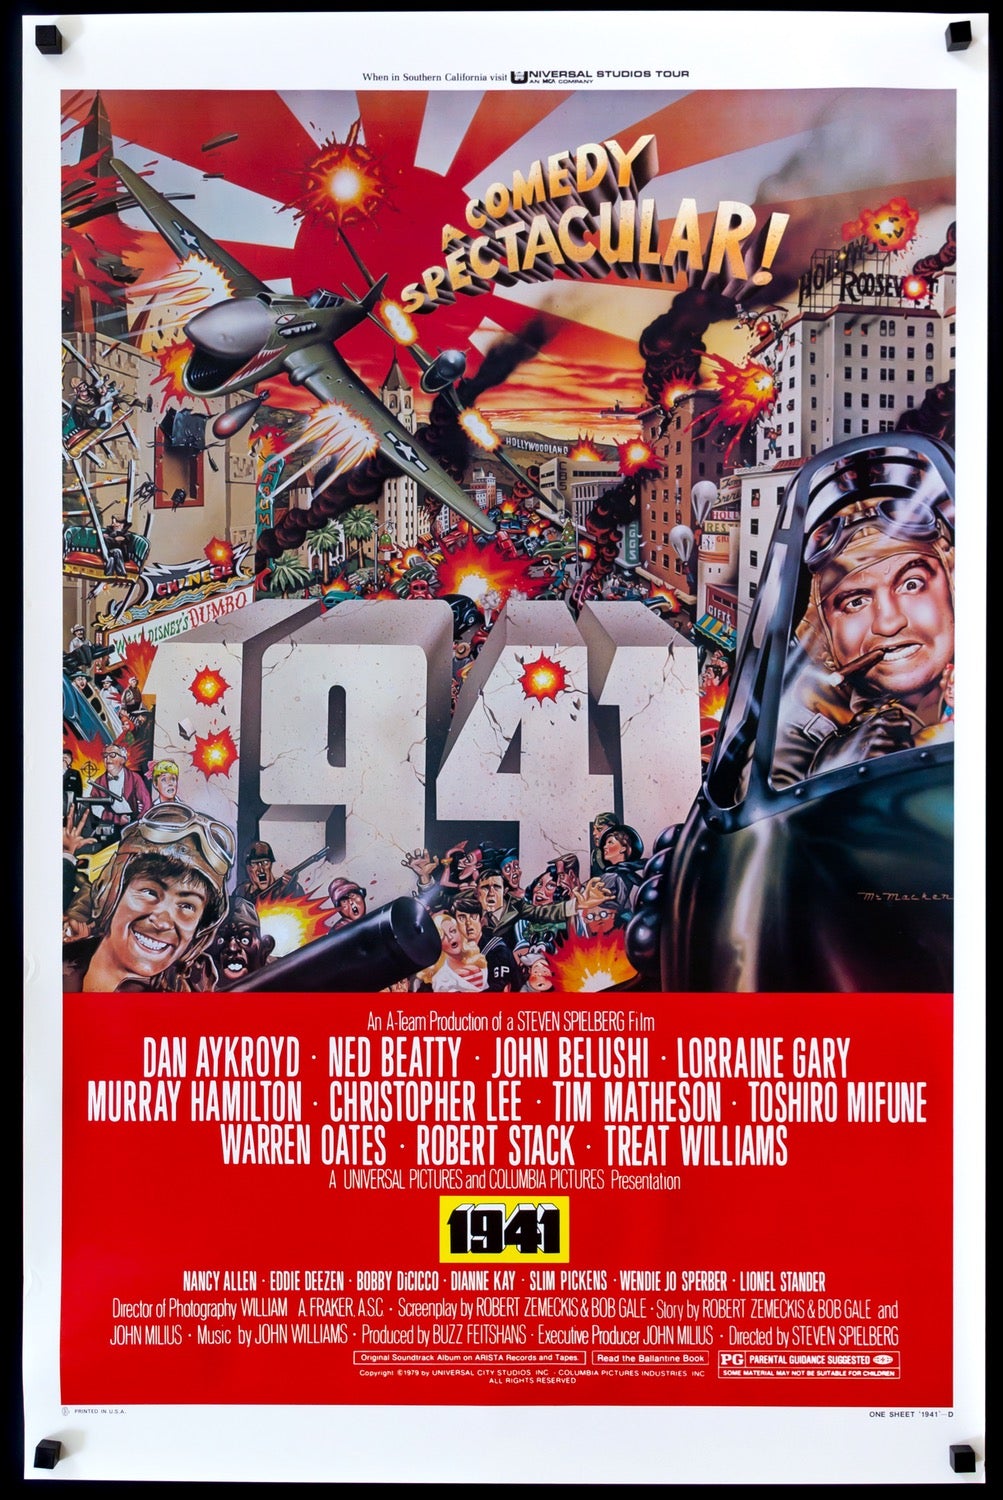 1941 (1979) original movie poster for sale at Original Film Art